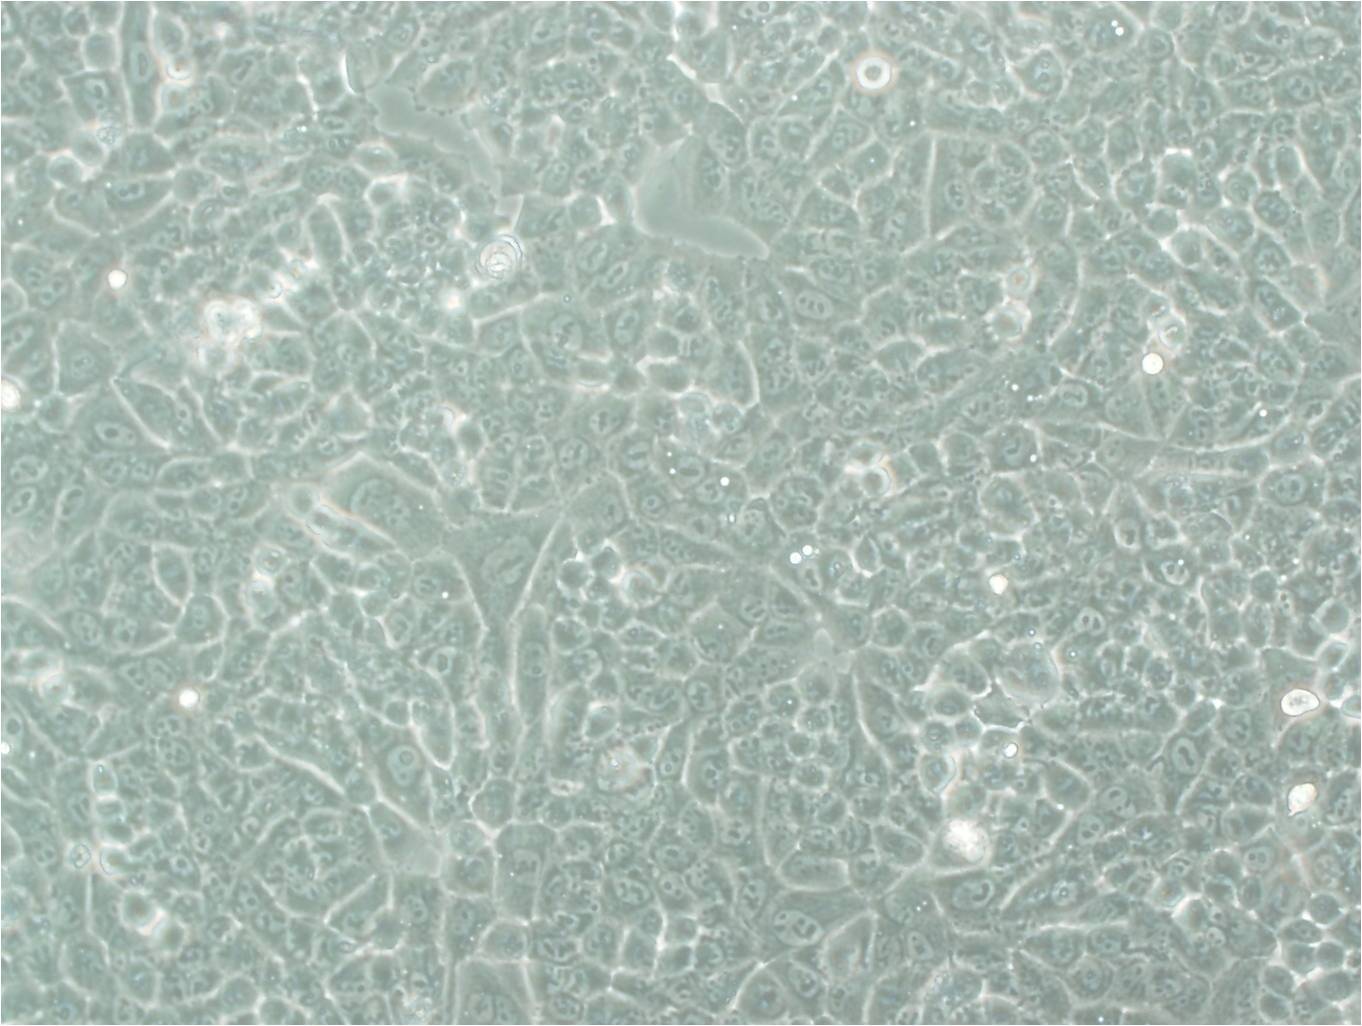 NCI-H1341 Cell|人小细胞肺癌细胞,NCI-H1341 Cell